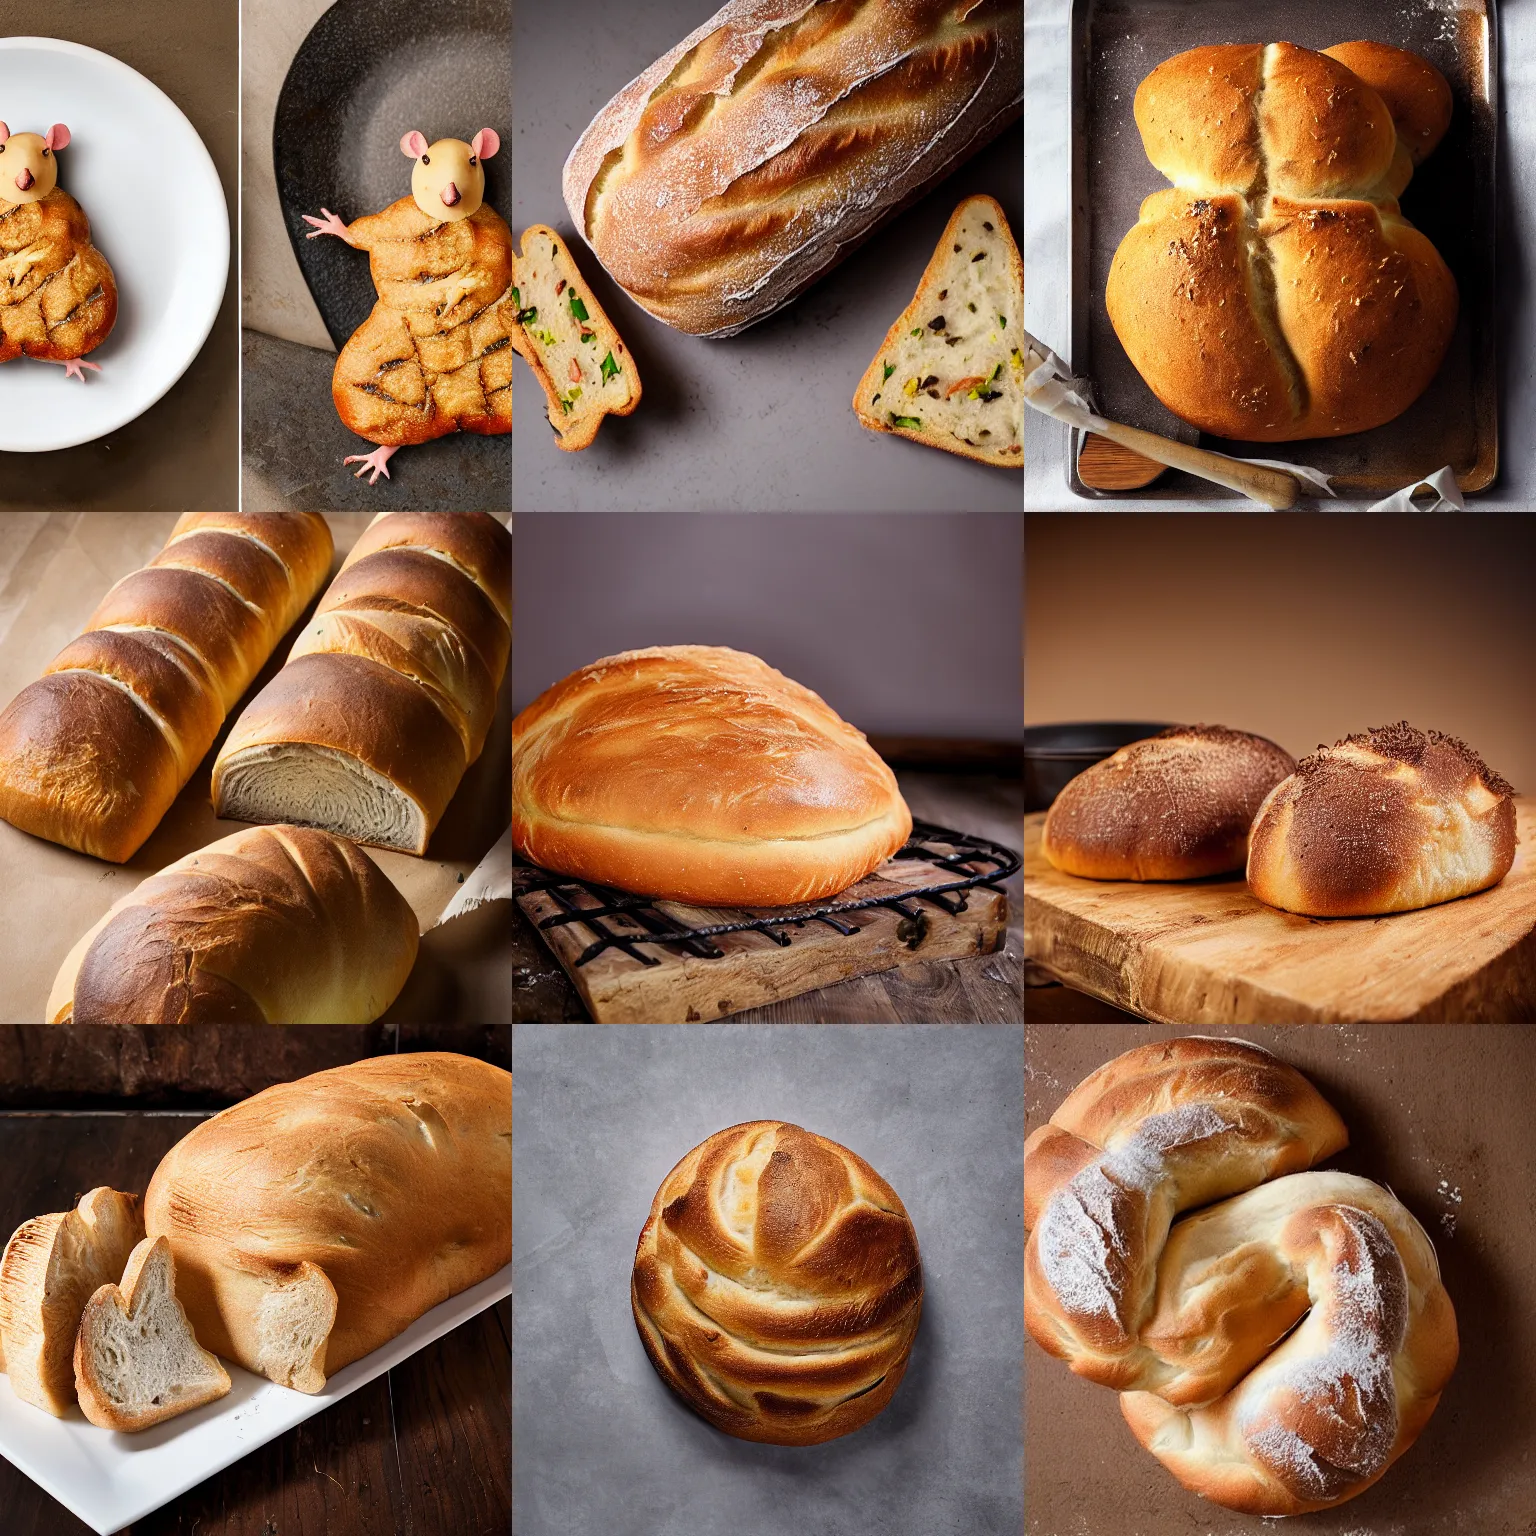 Prompt: rat bread, food photography, studio lighting, delicious